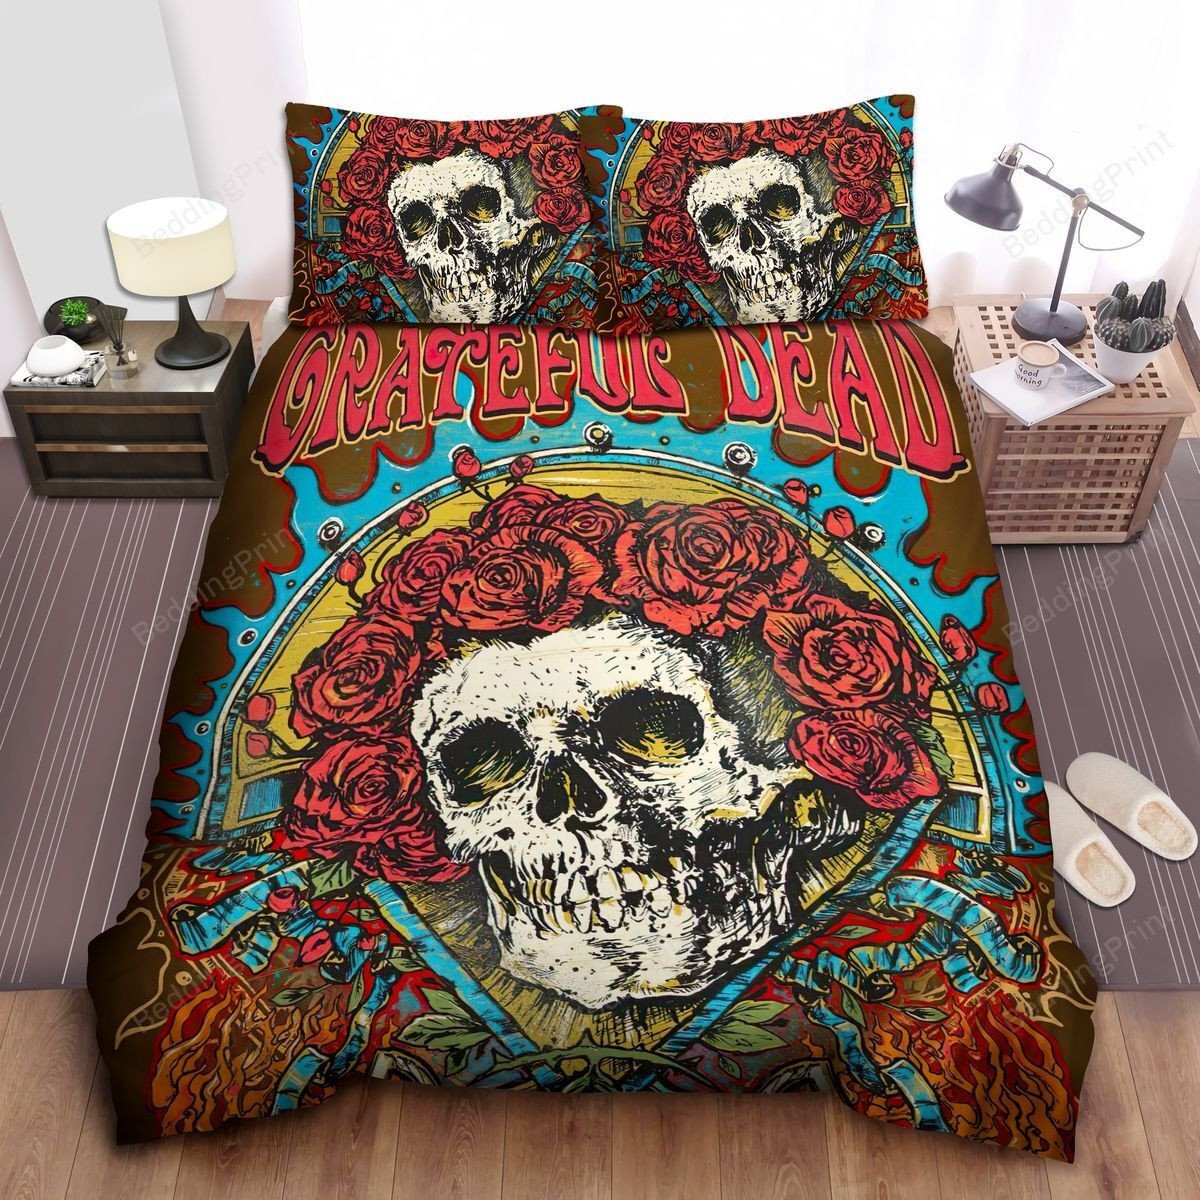 Grateful Dead Skull And Roses Art Bed Sheet Duvet Cover Bedding Sets